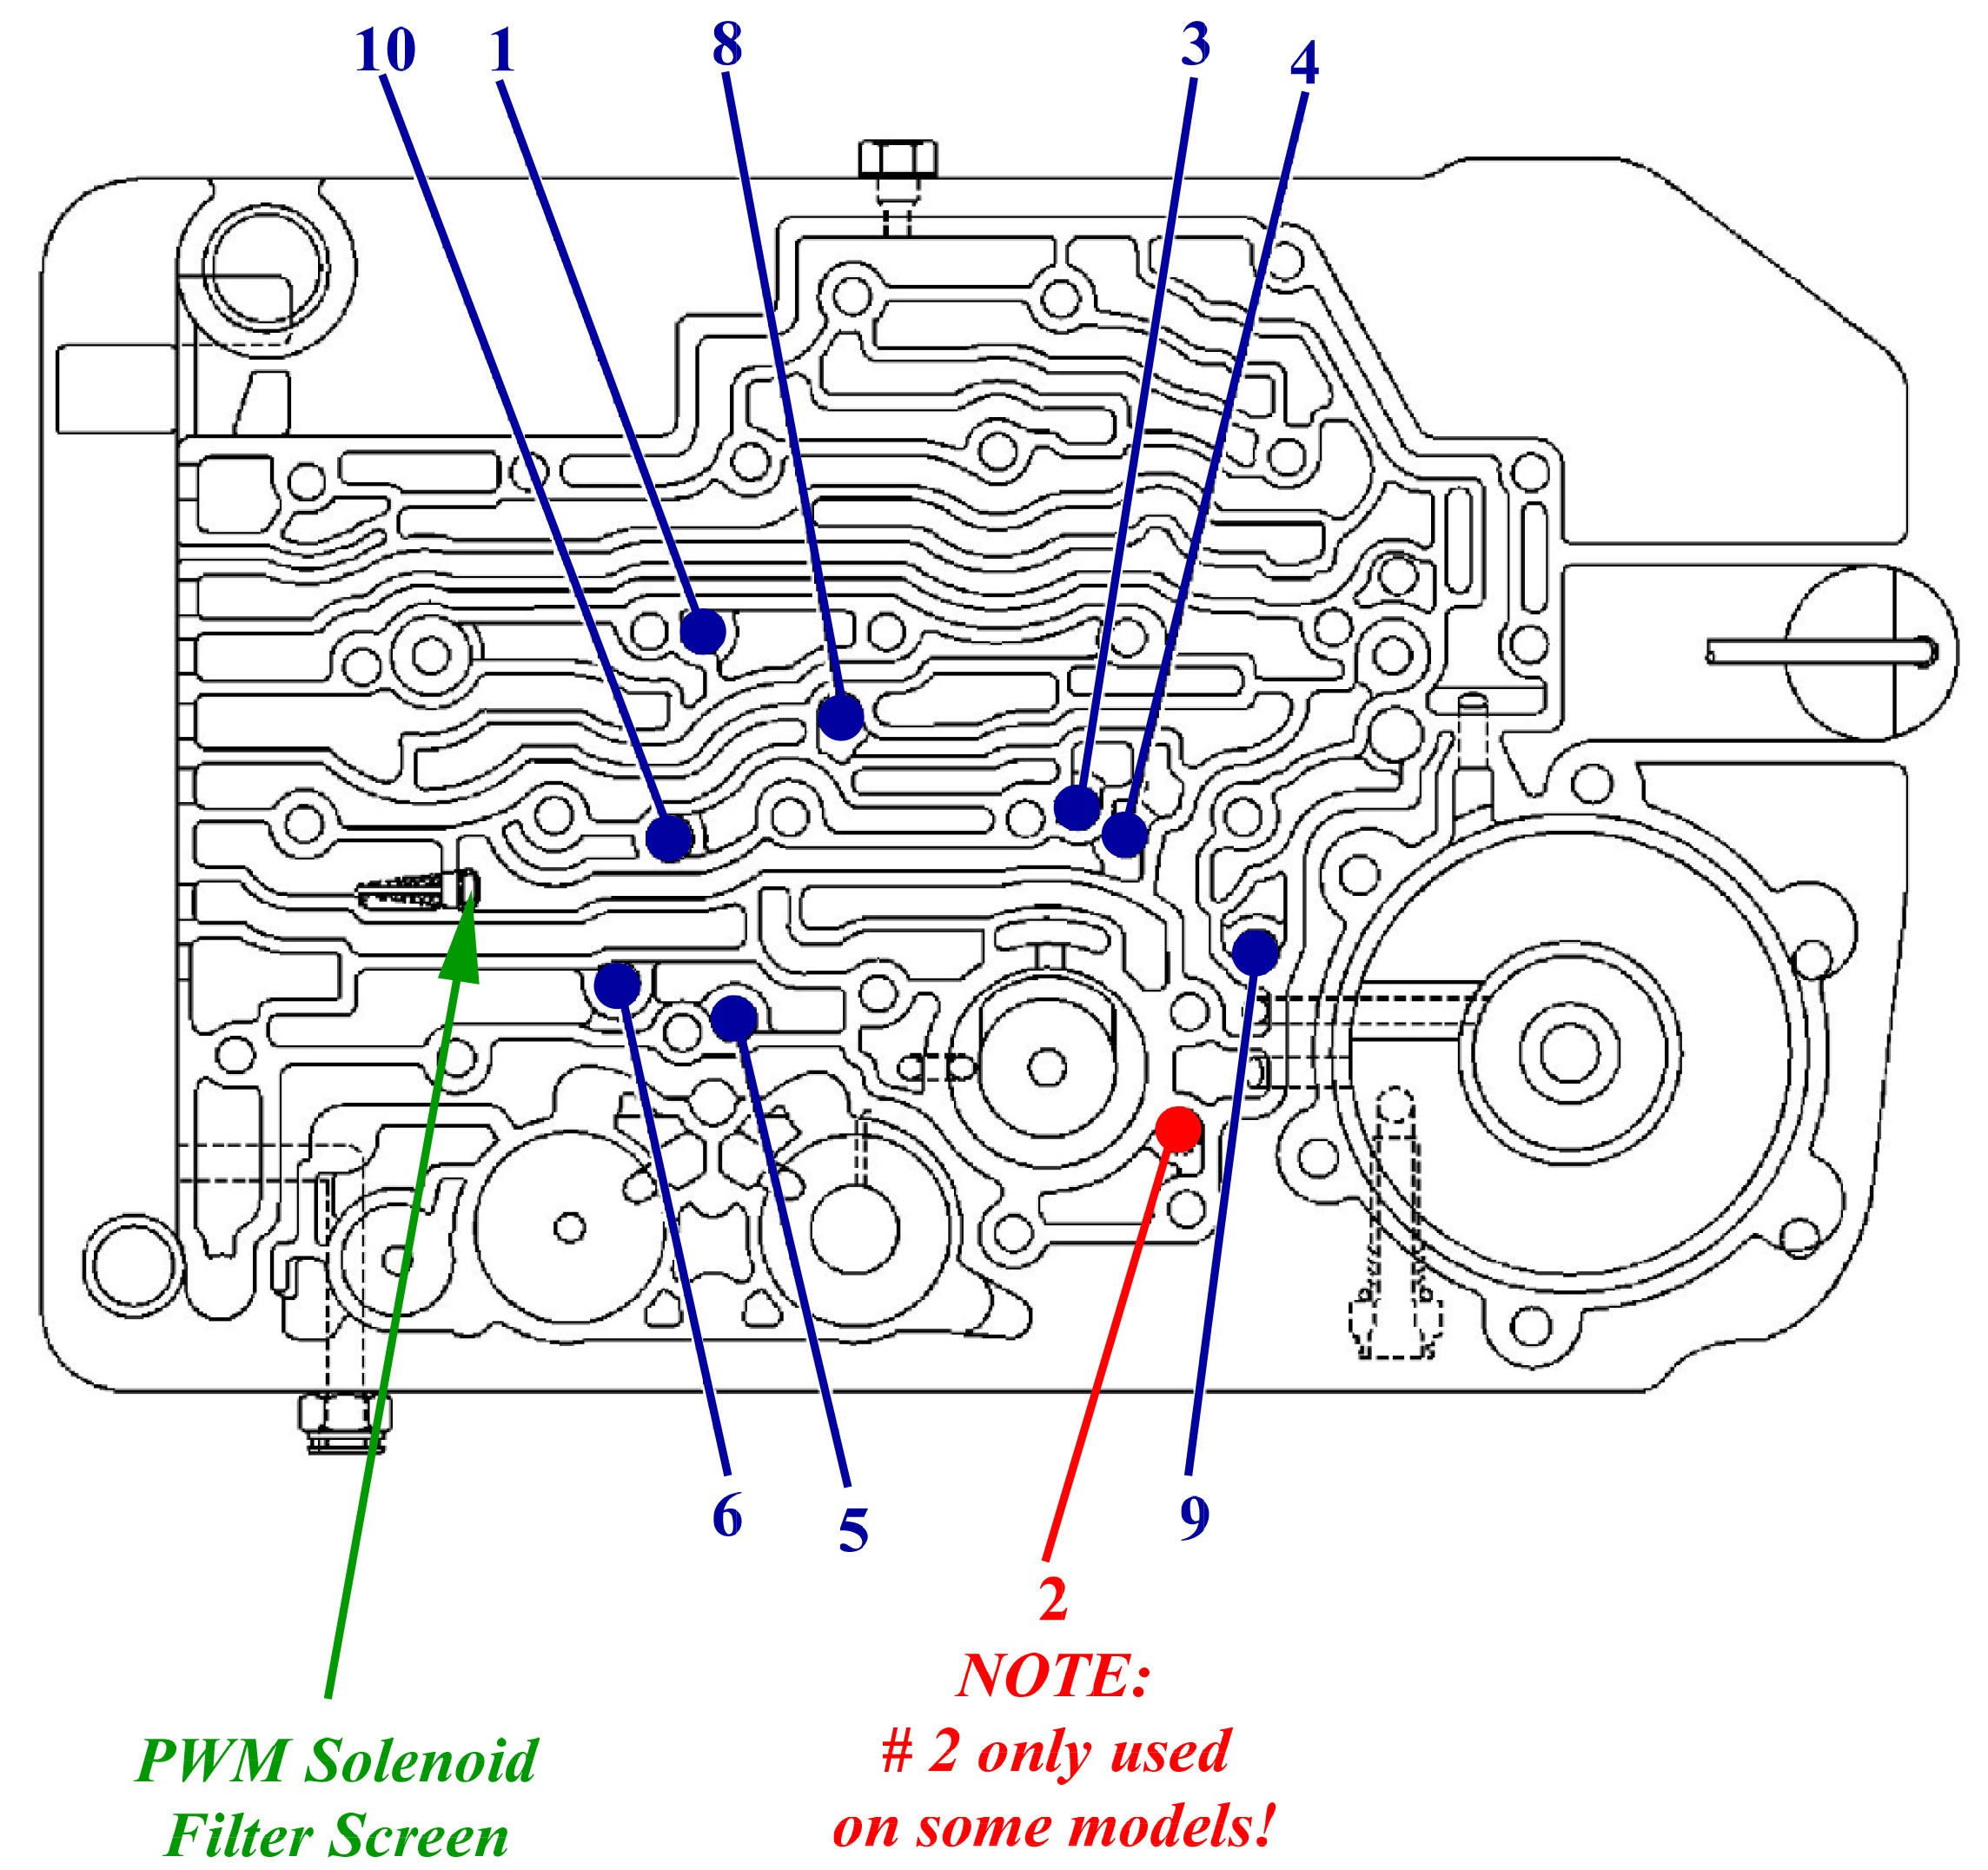 2005 Chevy Silverado Parts Diagram 4r100 Transmission Valve Body Diagram E4od Parts Diagram Wiring Of 2005 Chevy Silverado Parts Diagram